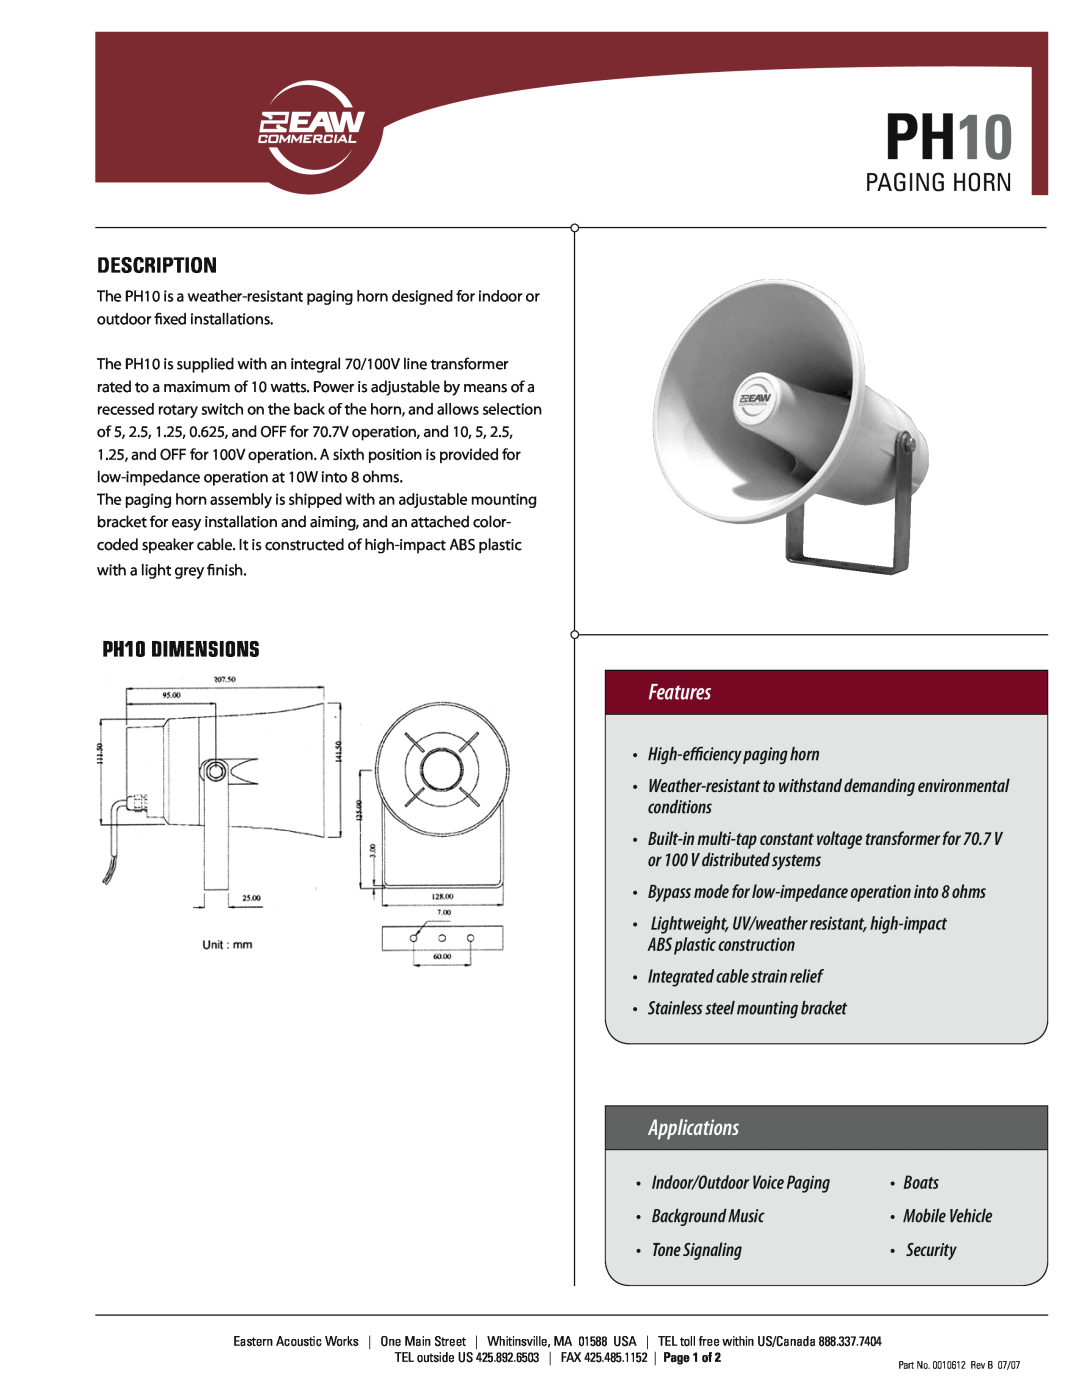 EAW dimensions Paging Horn, Description, PH10 DIMENSIONS, Features, Applications 